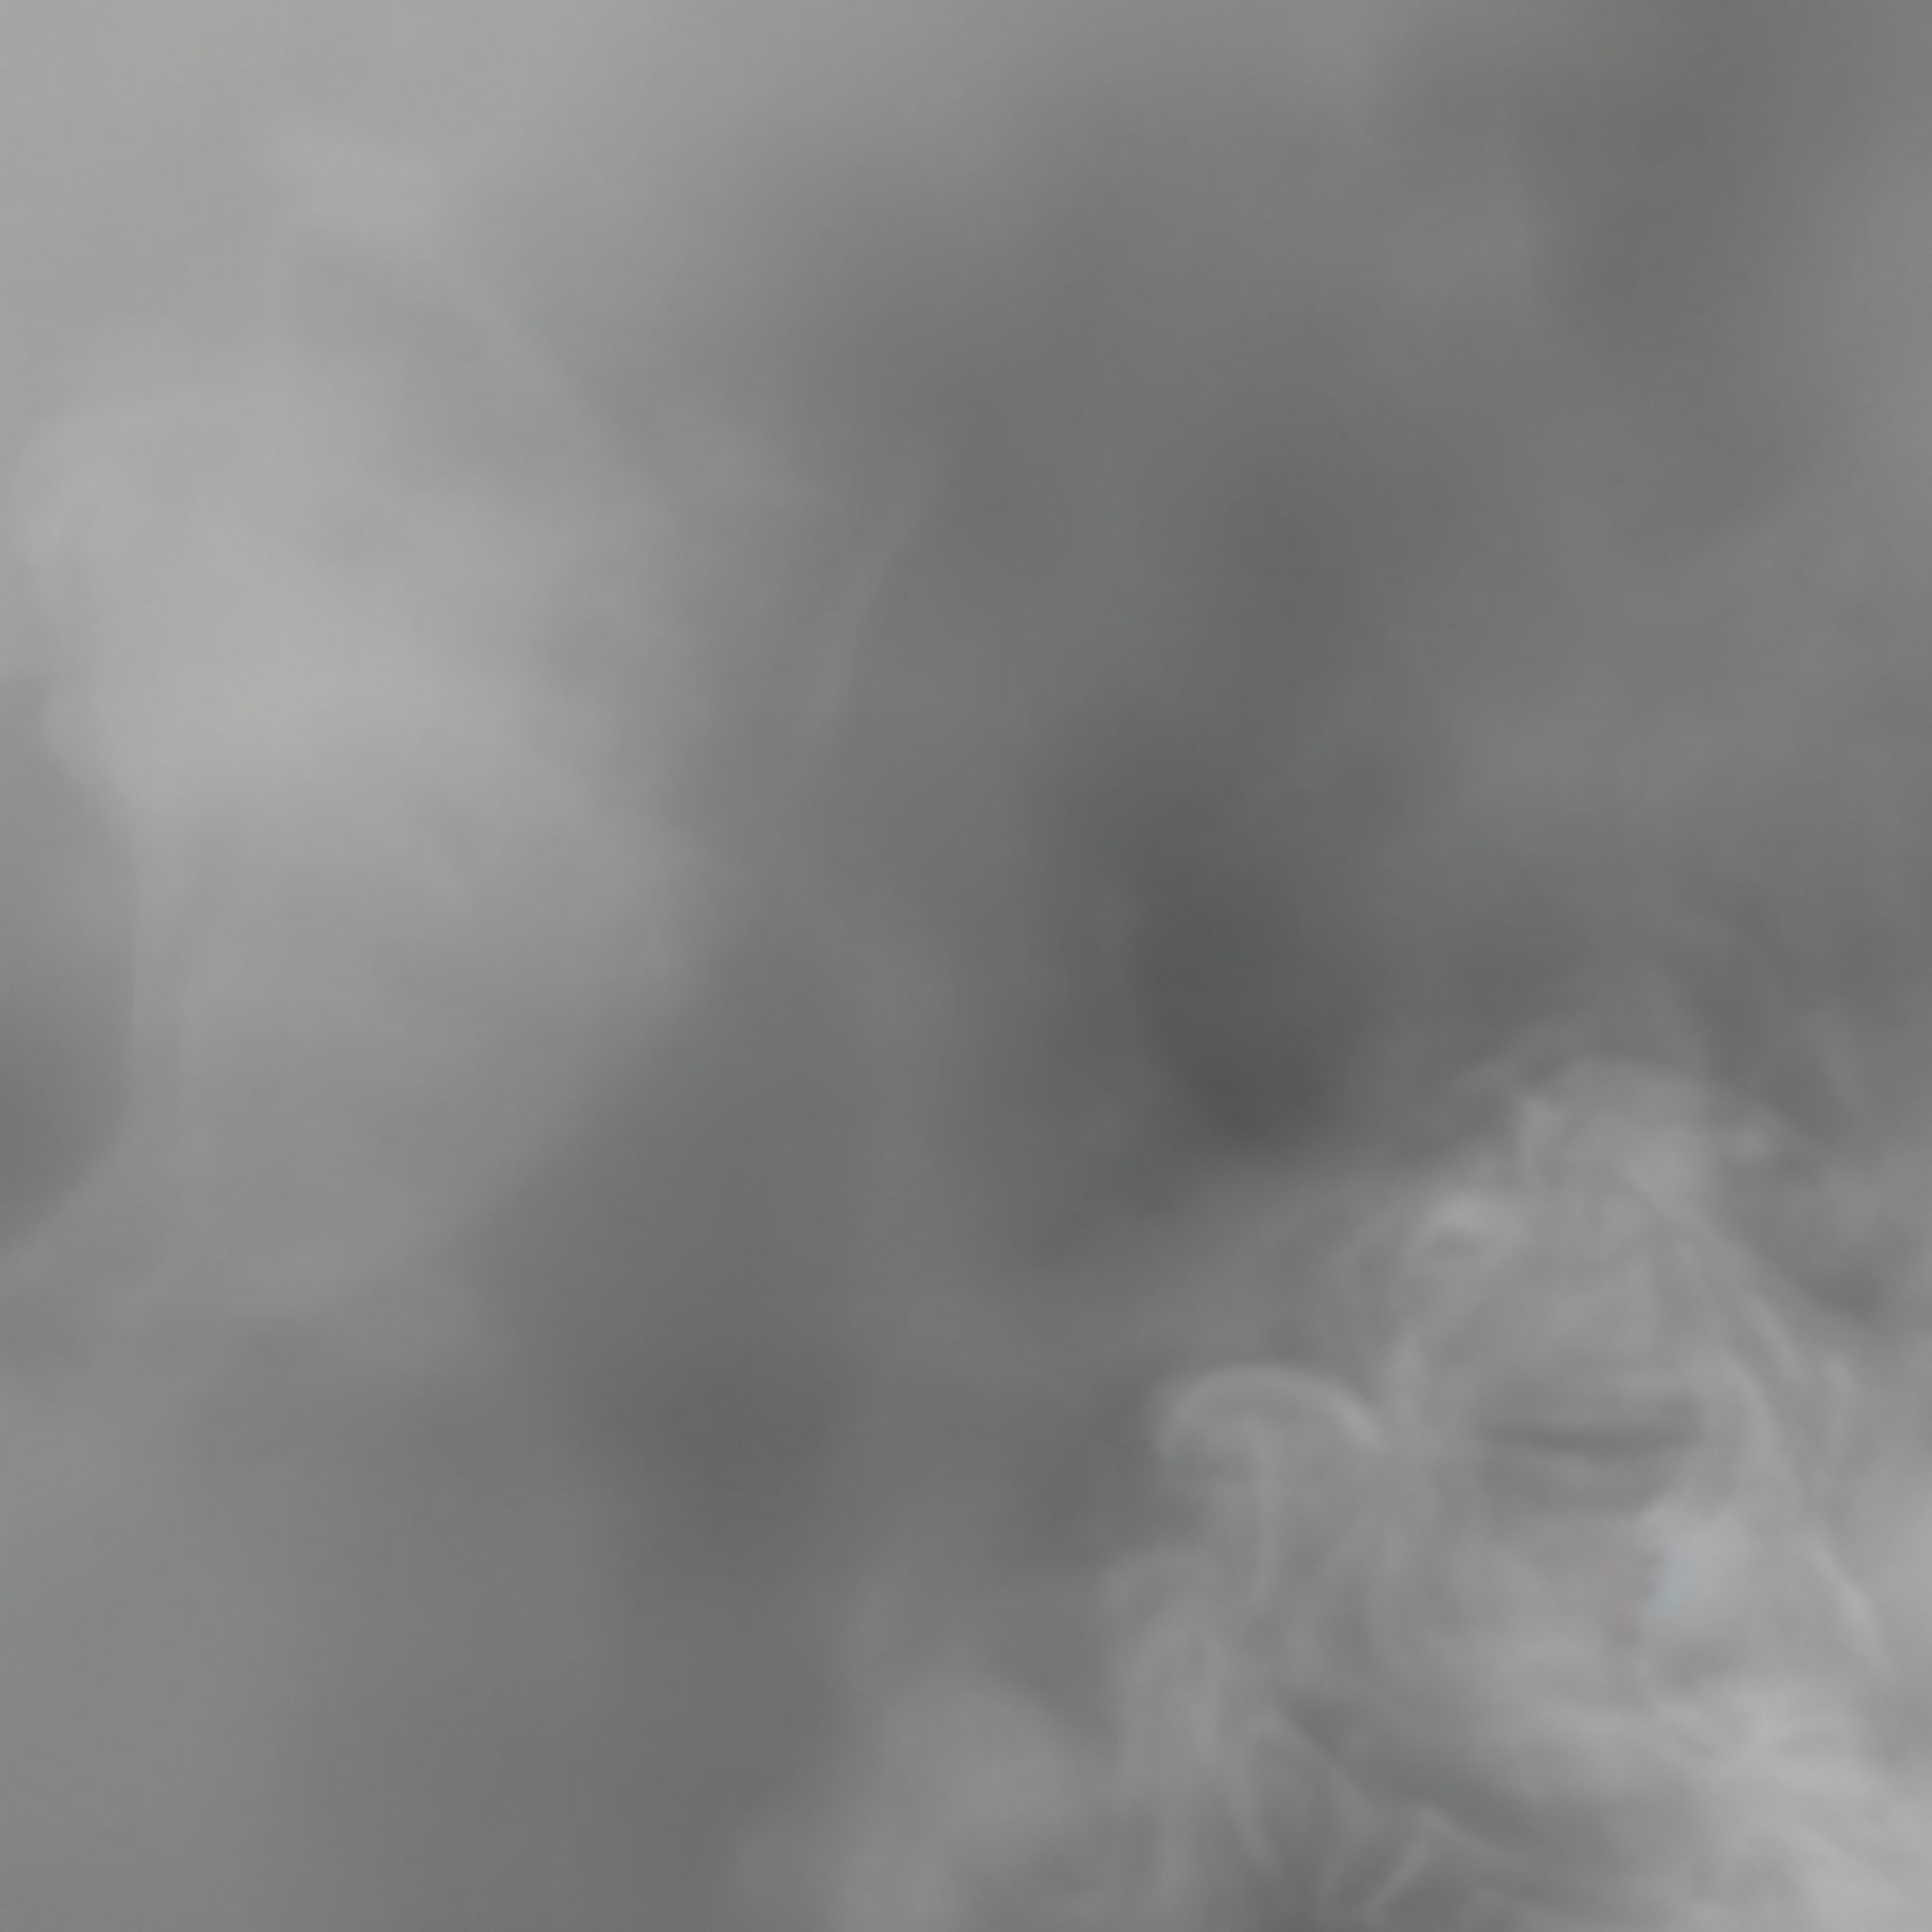 Smoky Haze on Black Background Free Image Download